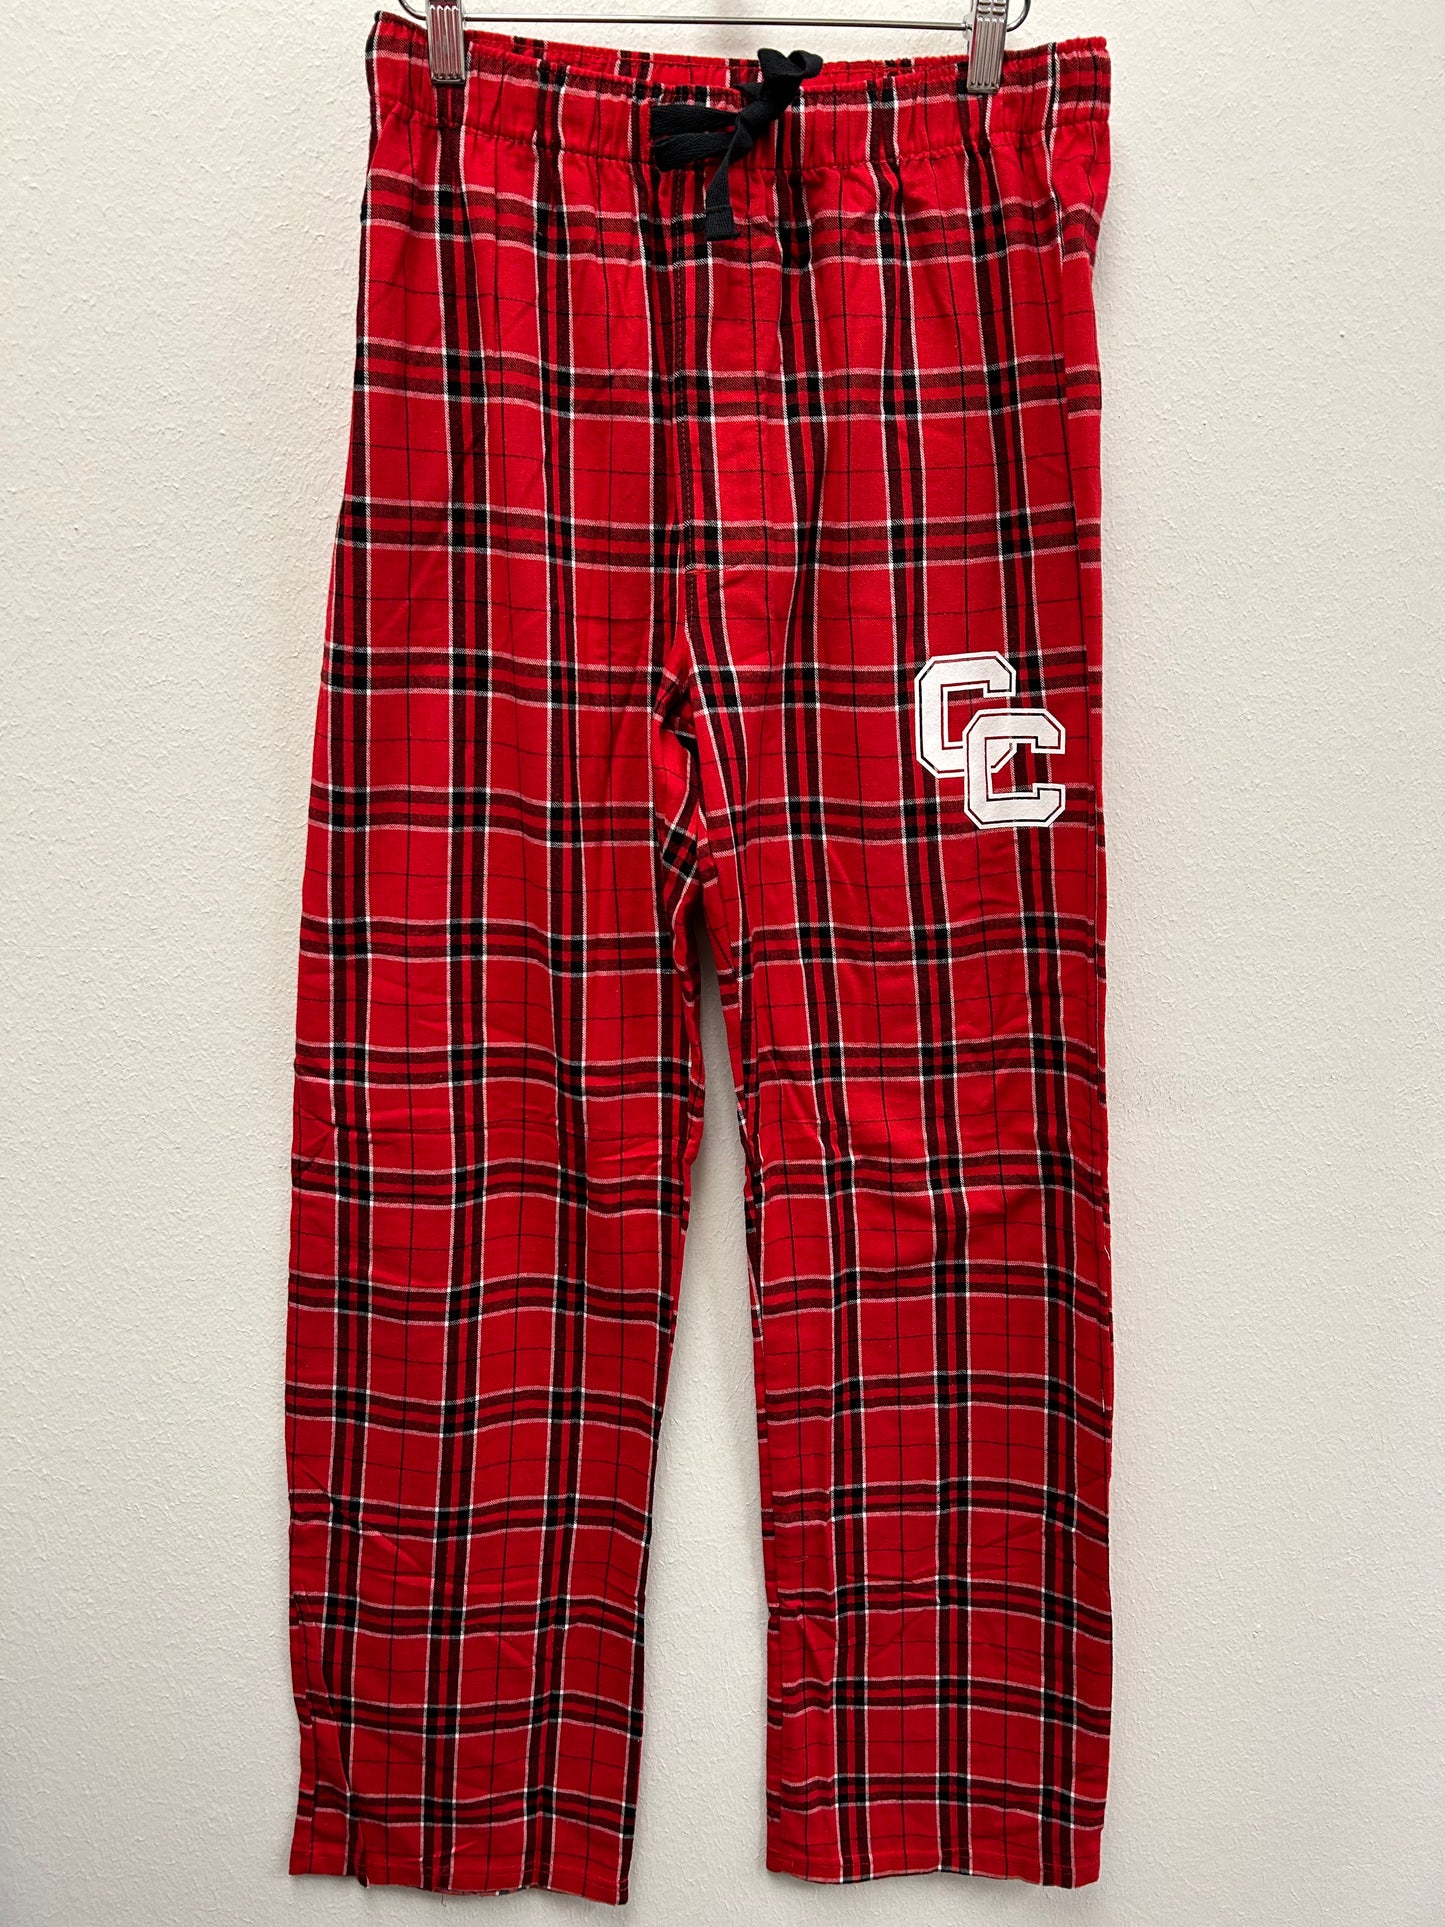 Red Plaid Flannel CC Pants